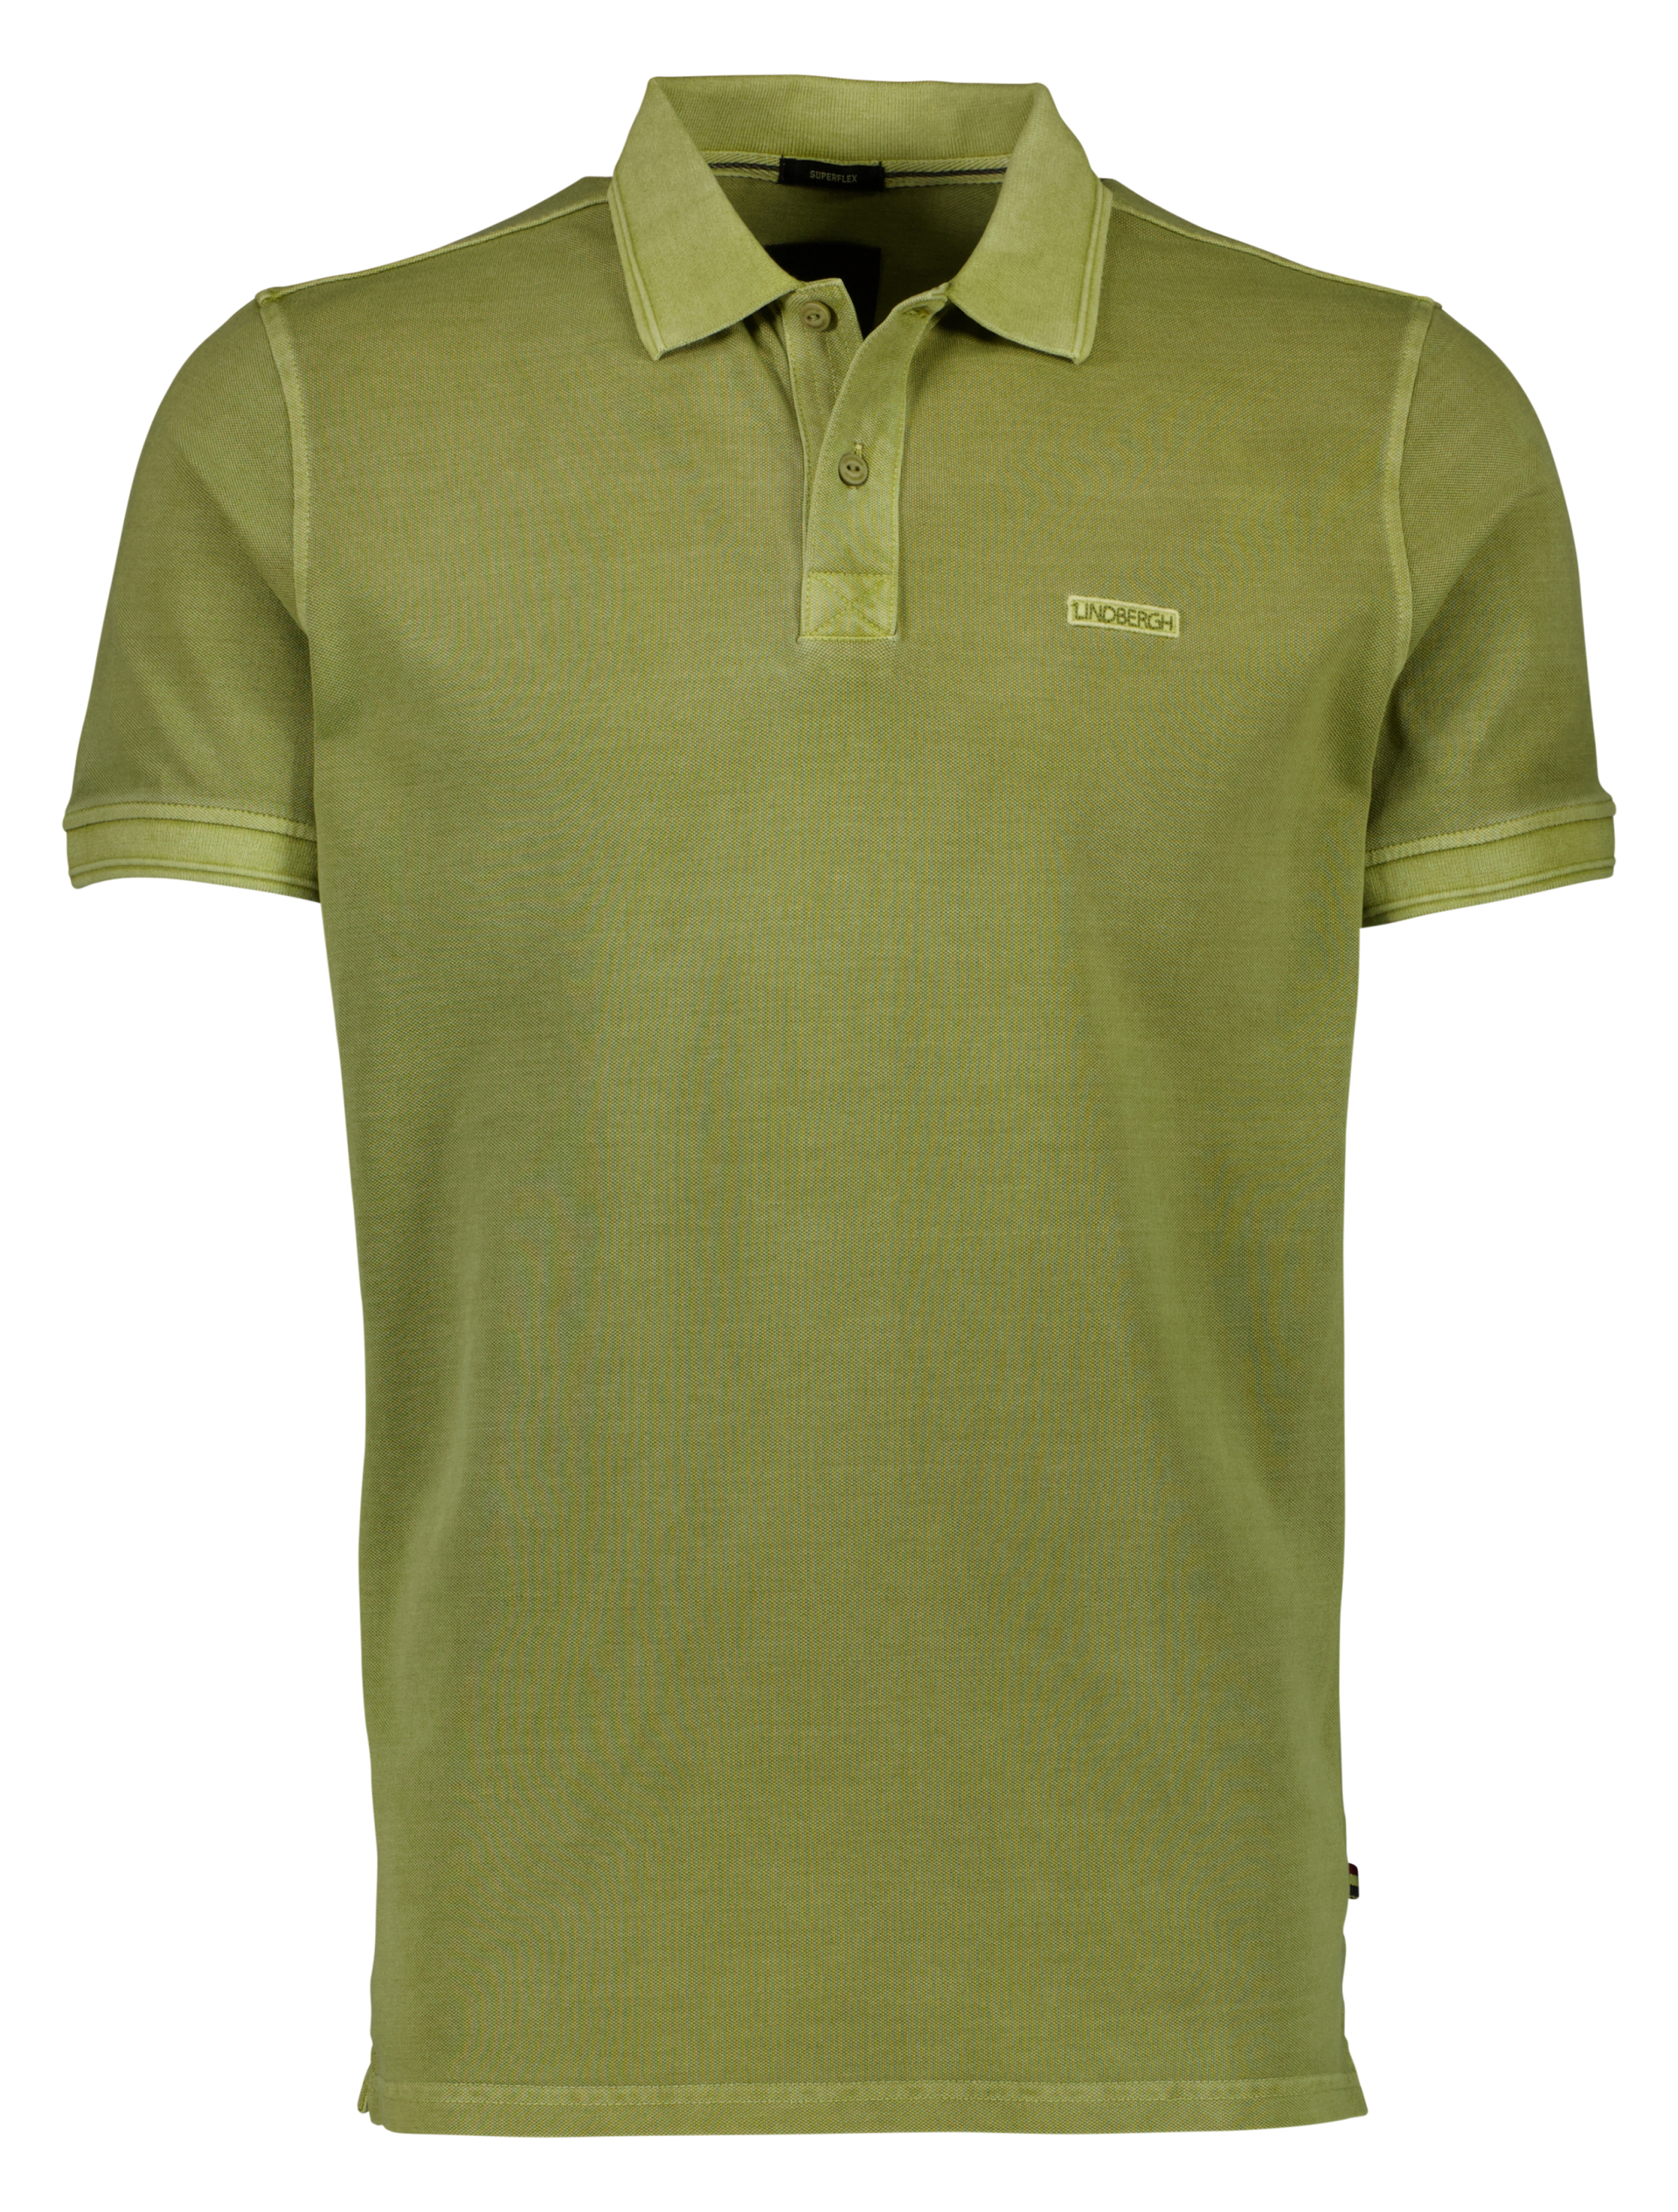 Lindbergh Polo shirt green / khaki